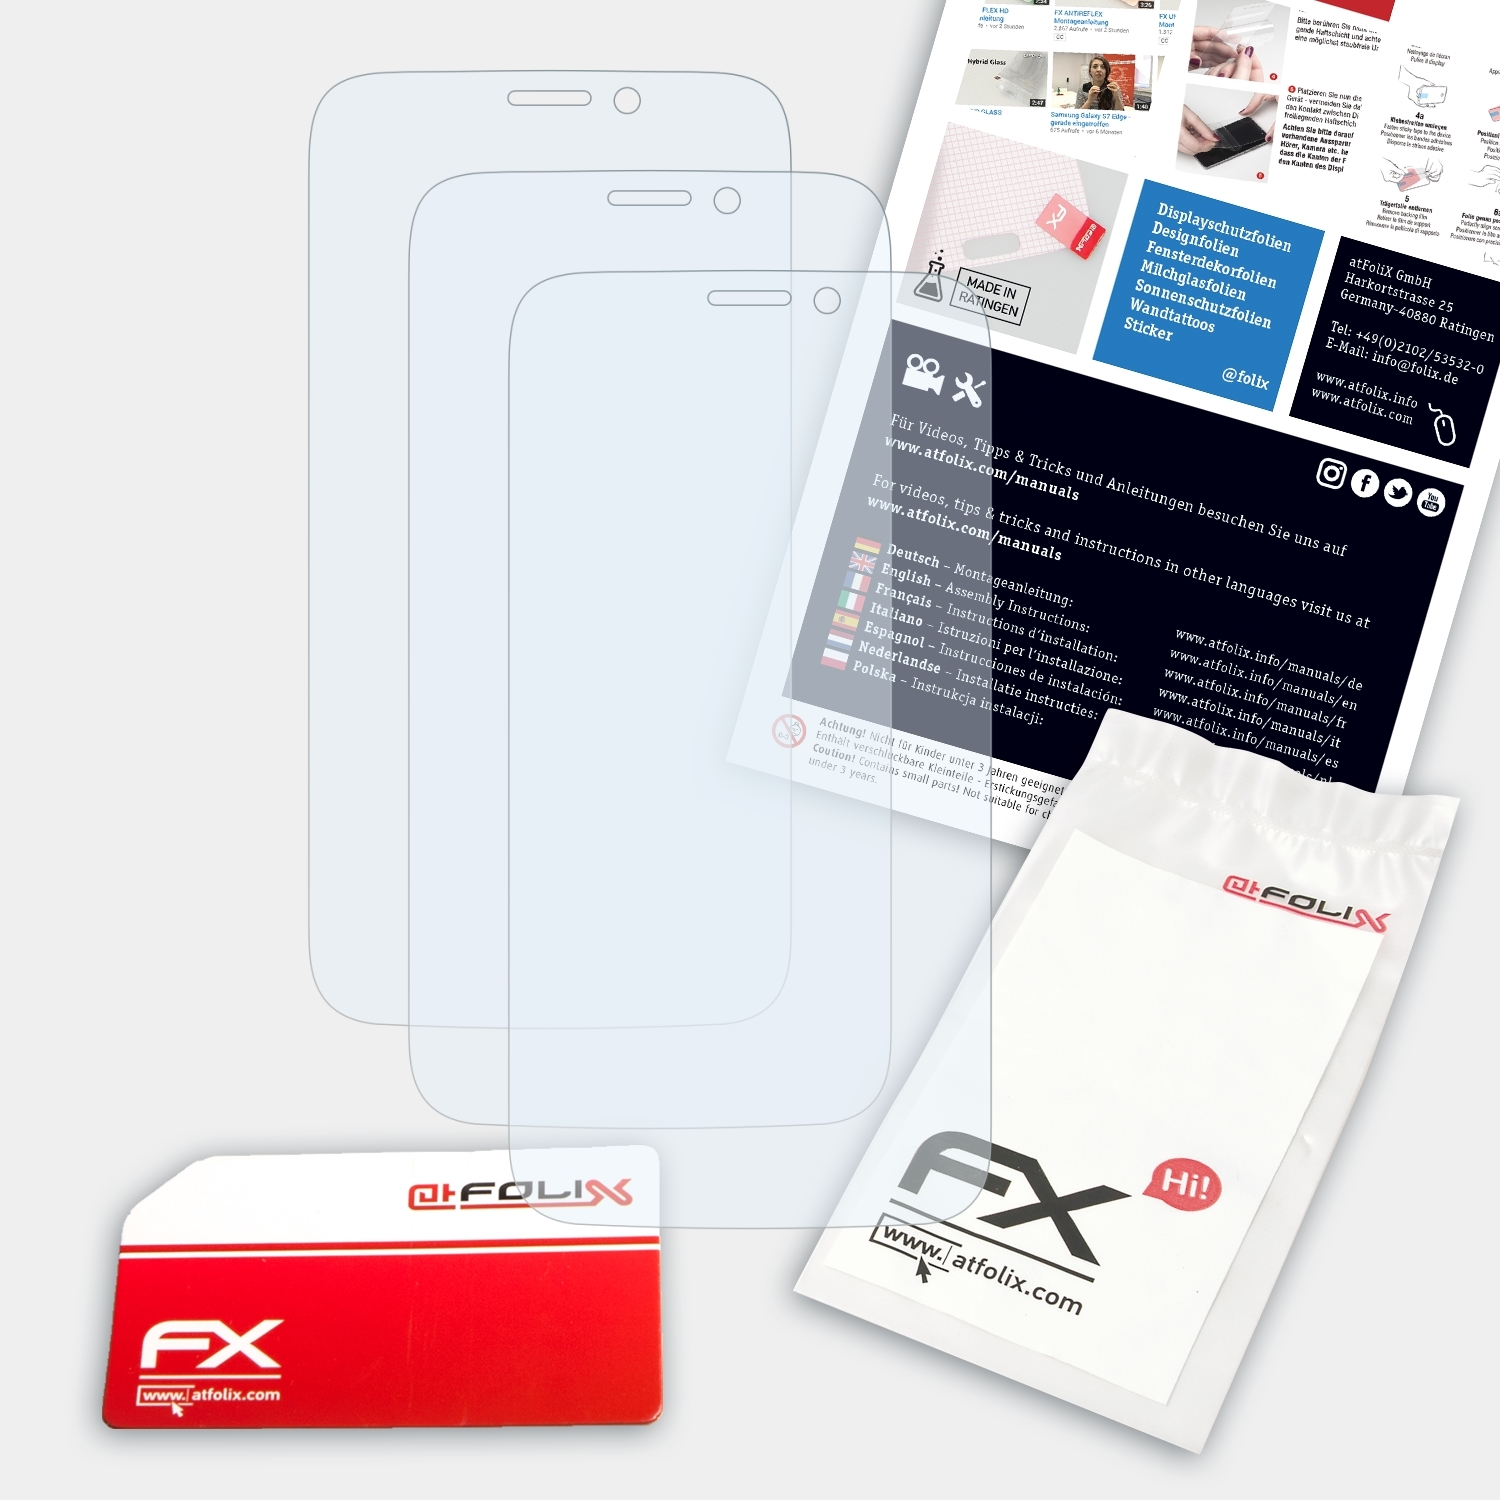 ATFOLIX 3x FX-Clear Displayschutz(für Blackview A5)